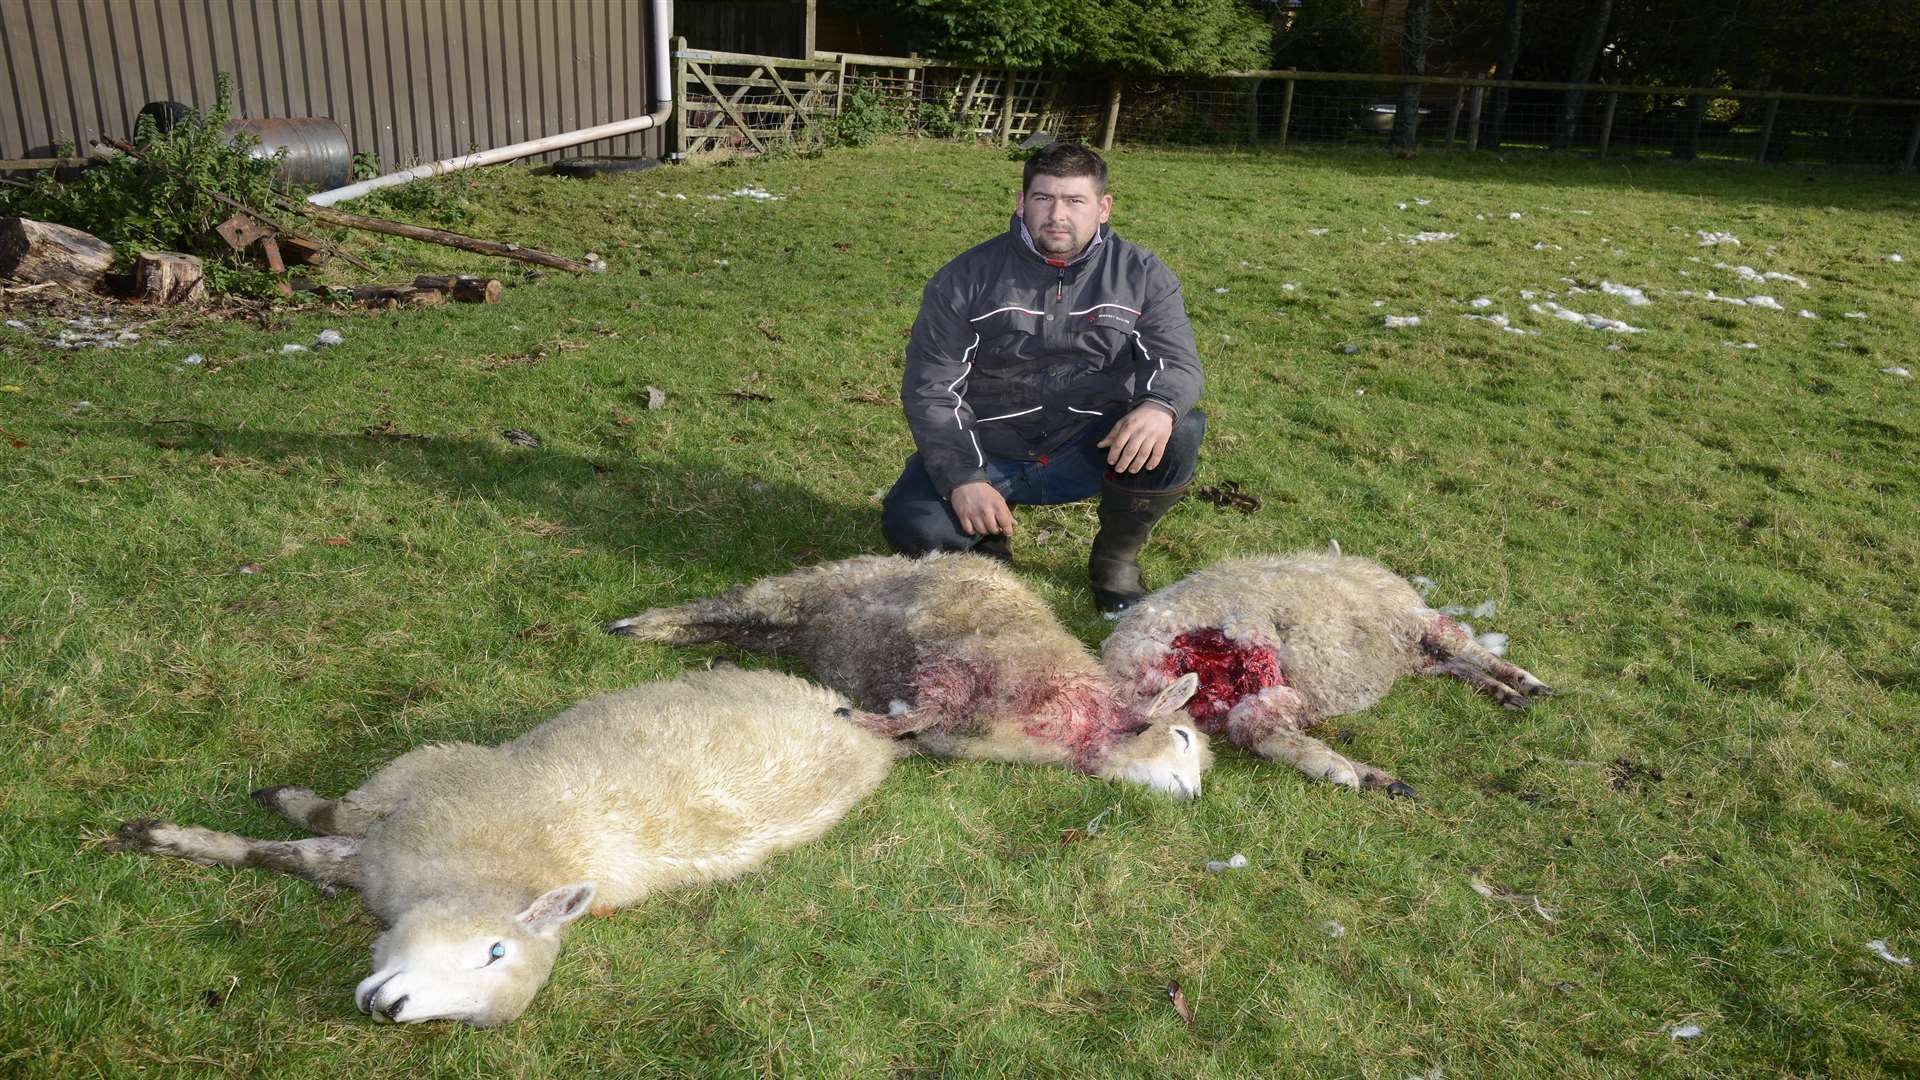 Farmer Alex Pynn was devestated to discover three dead sheep